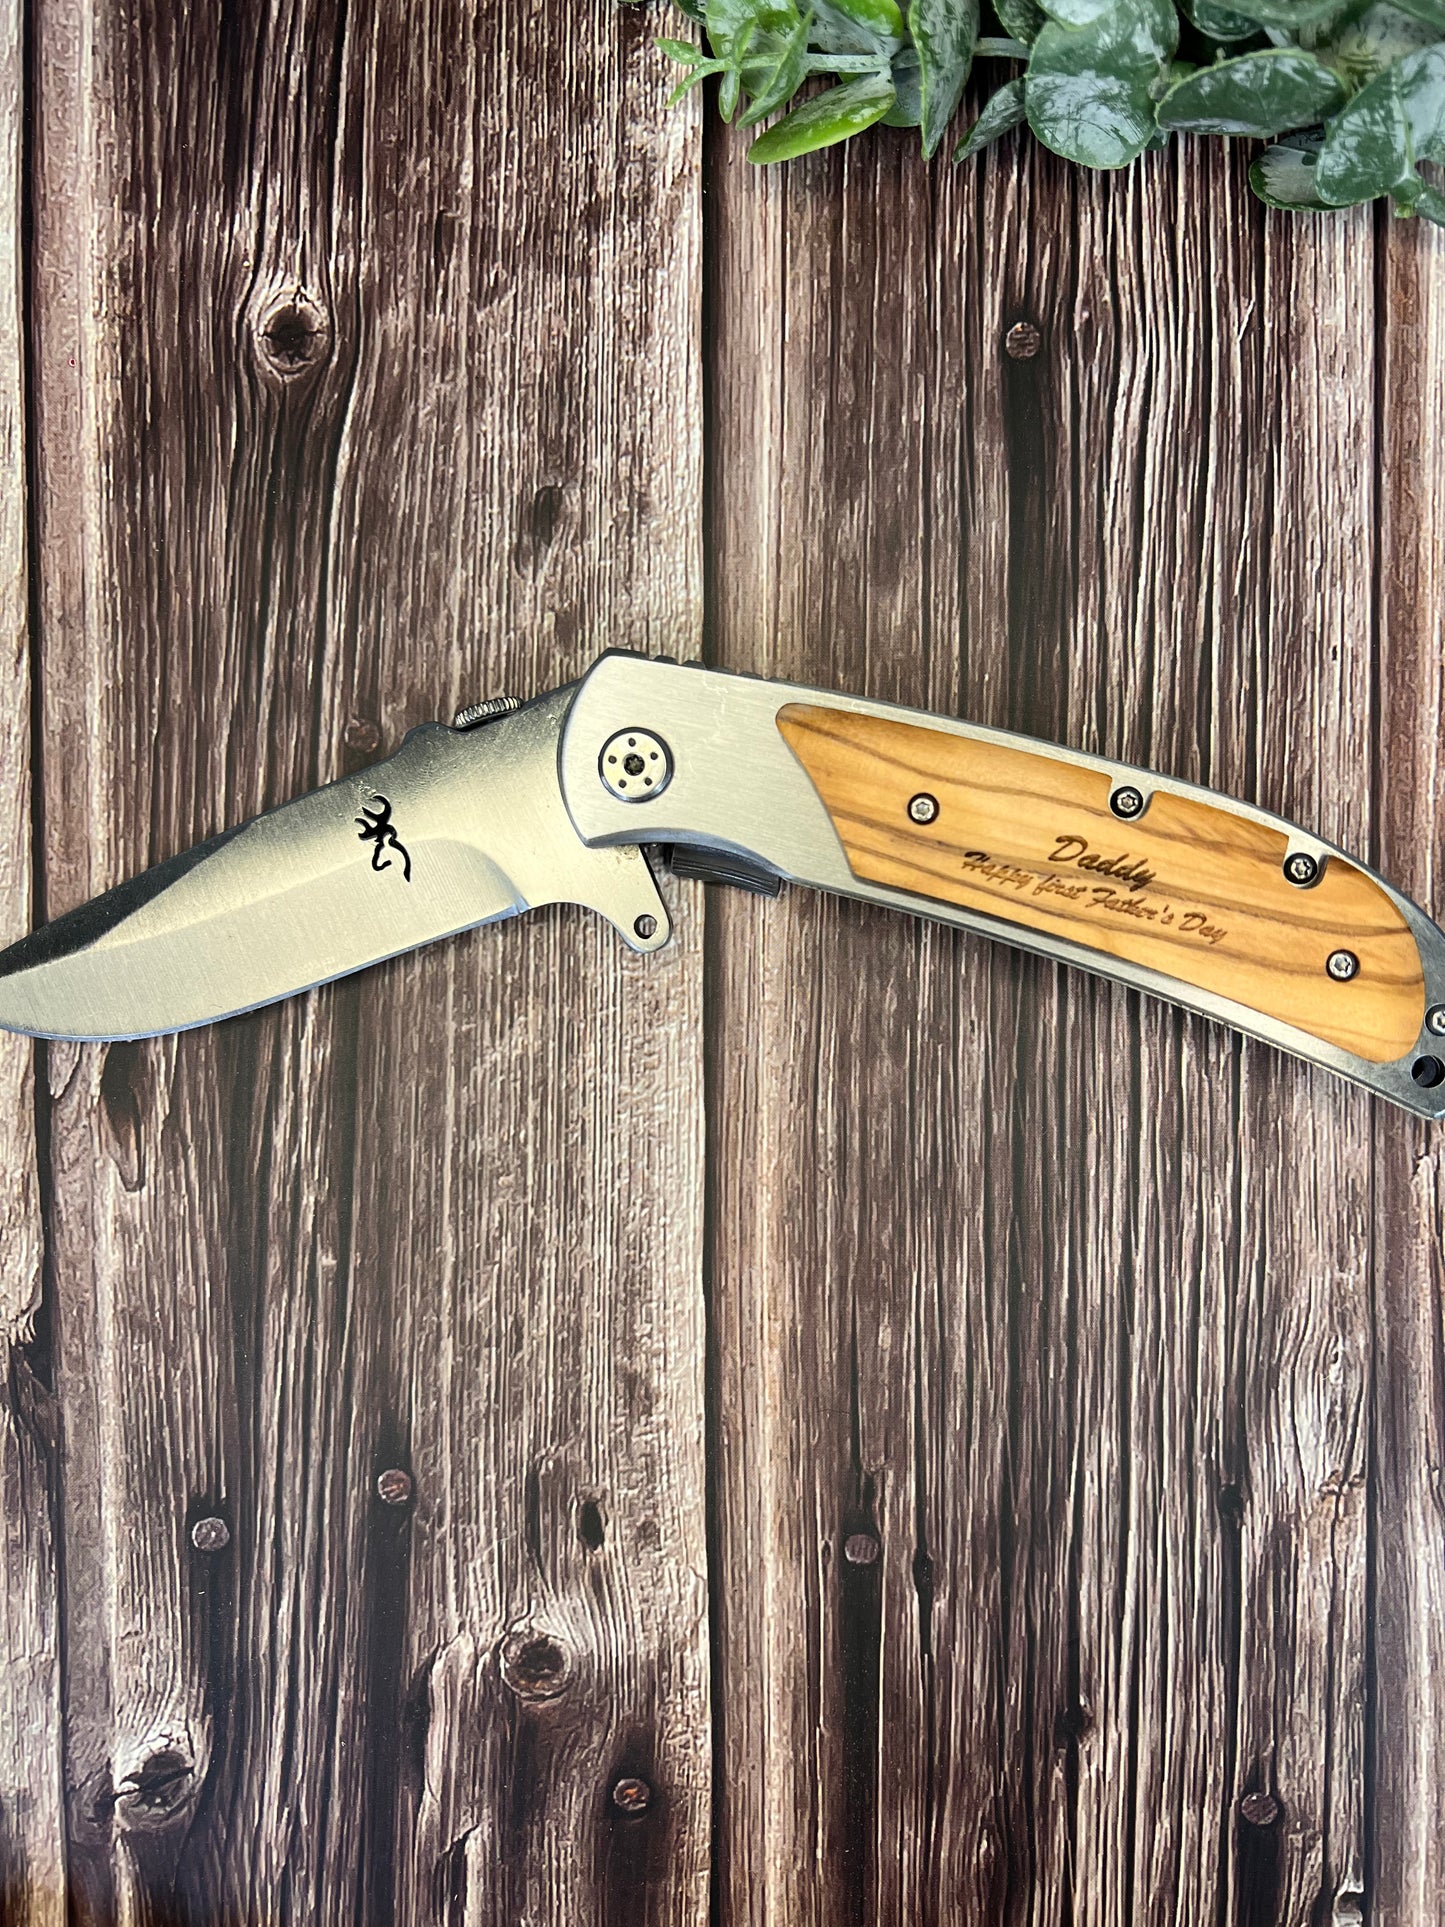 Engraved wooden handle knife